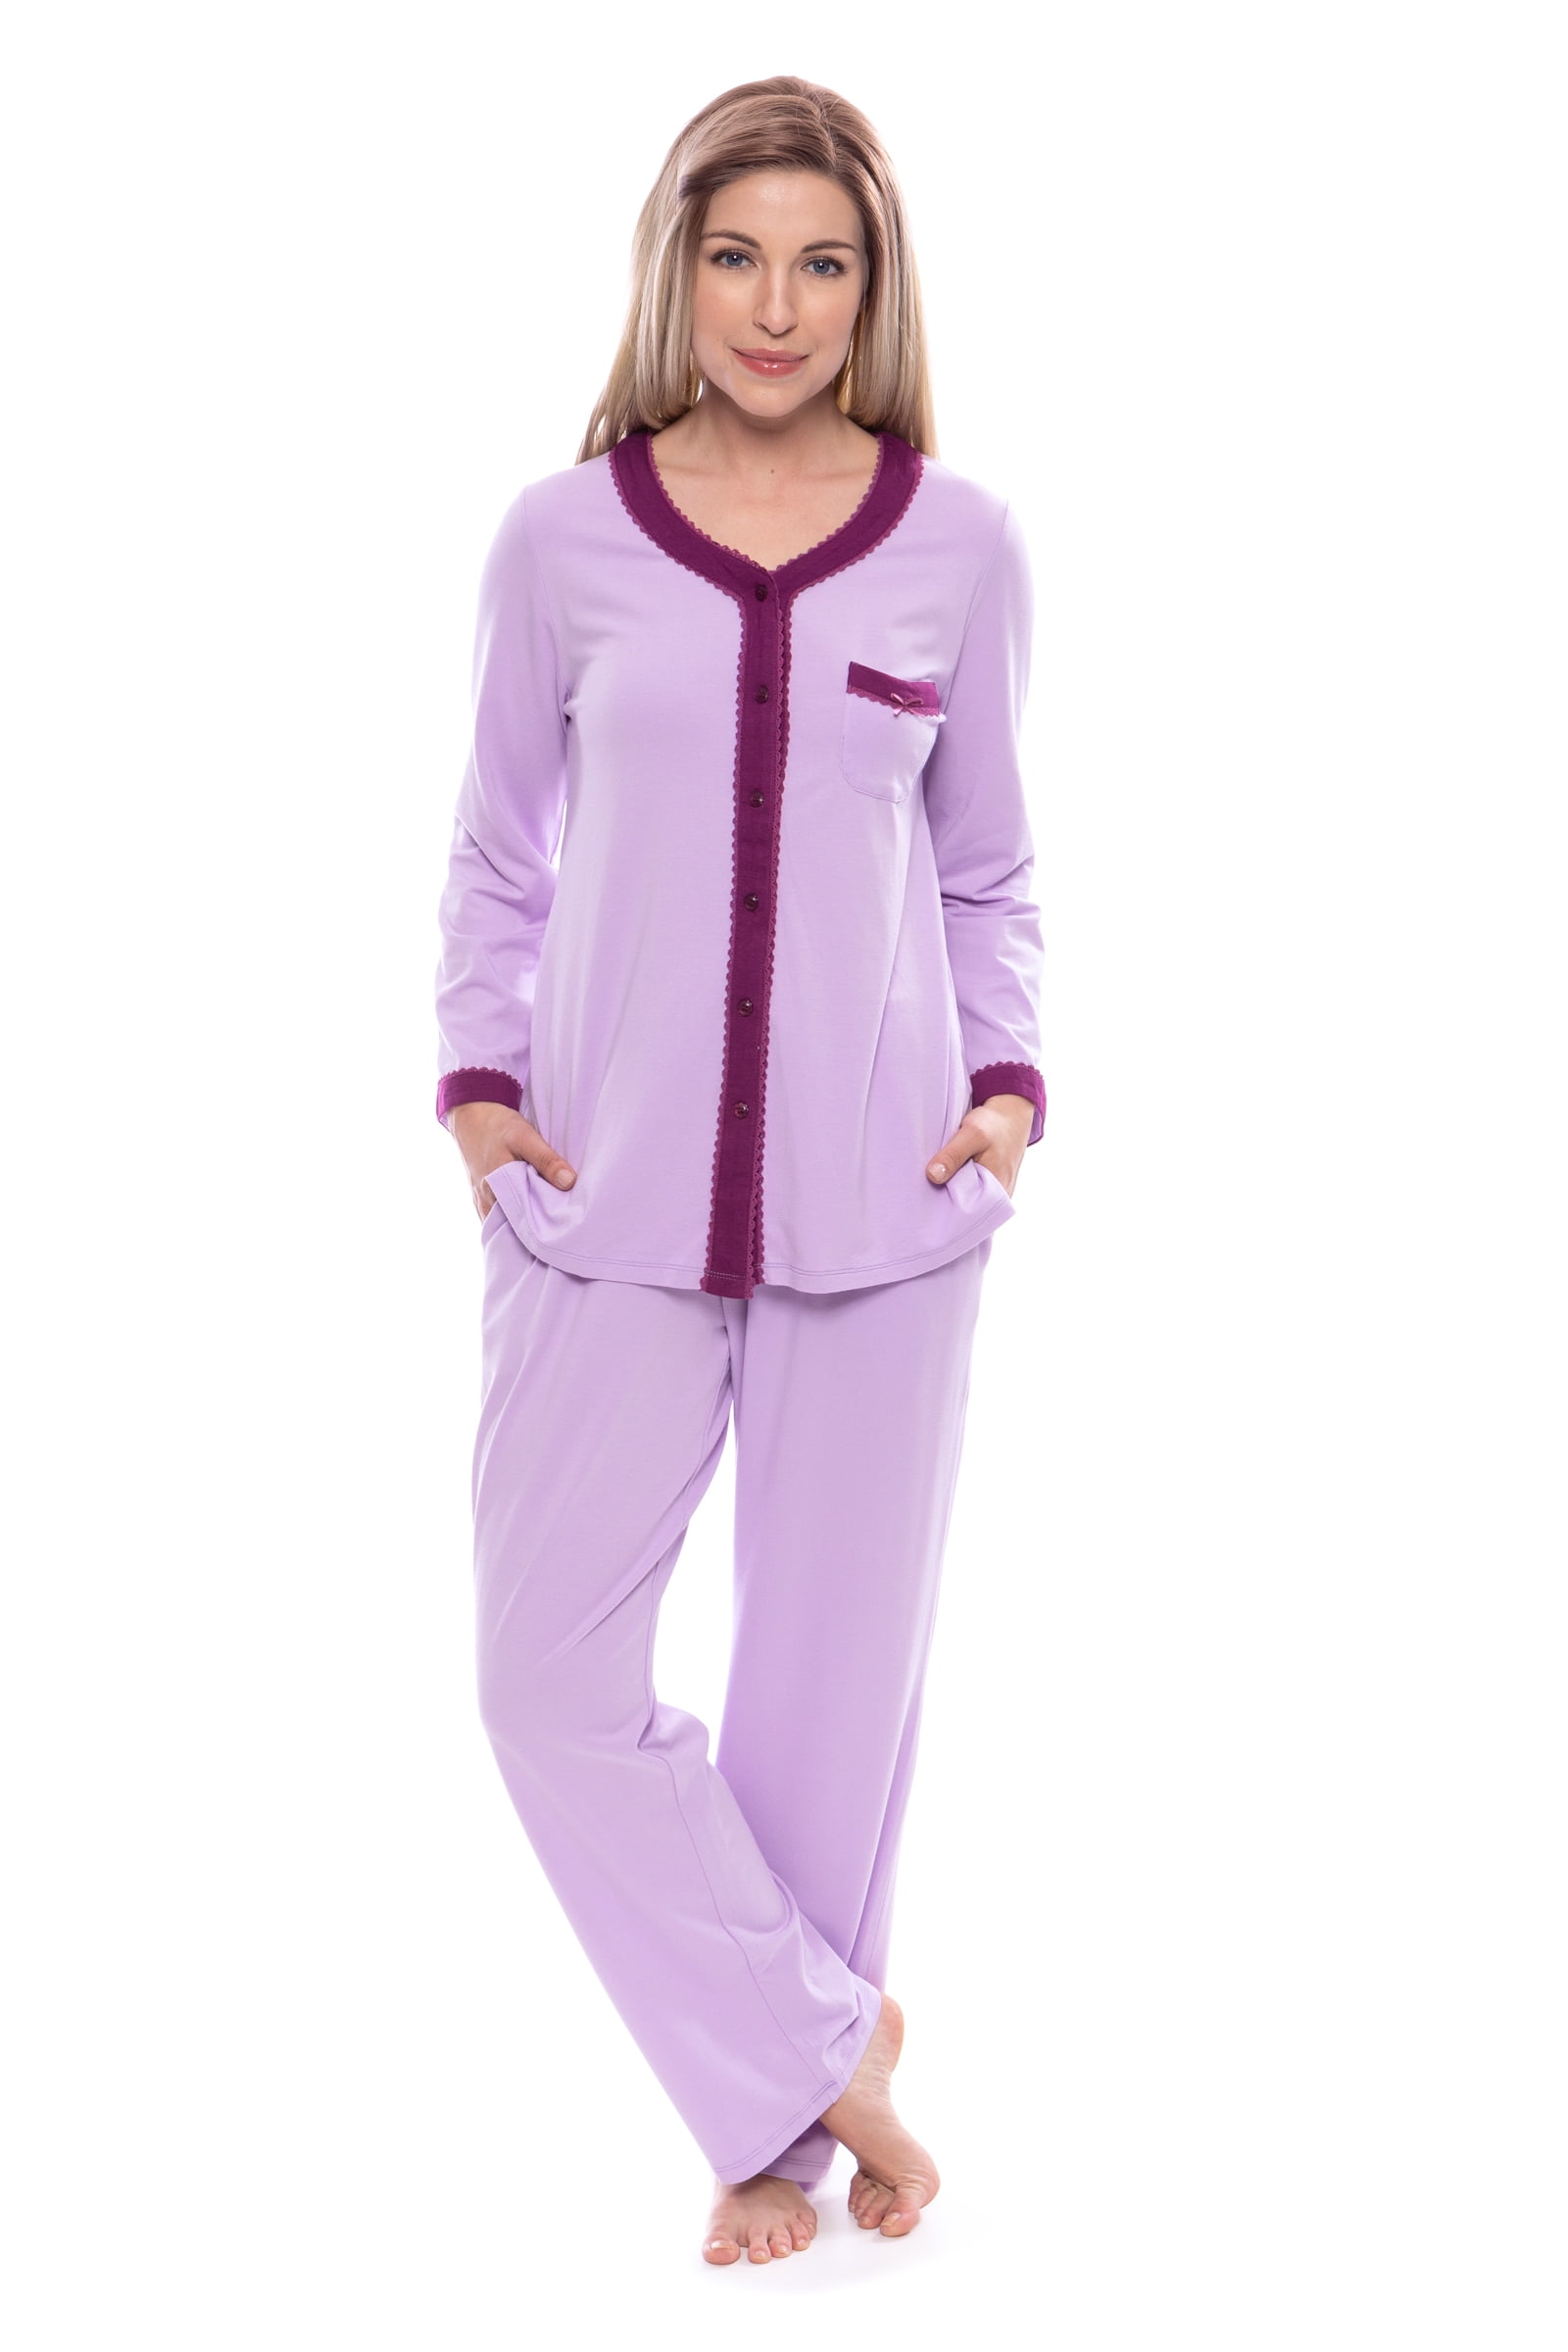 Women's Long Sleeve Pajama Set - Button Up Sleepwear by Texere (Eco ...